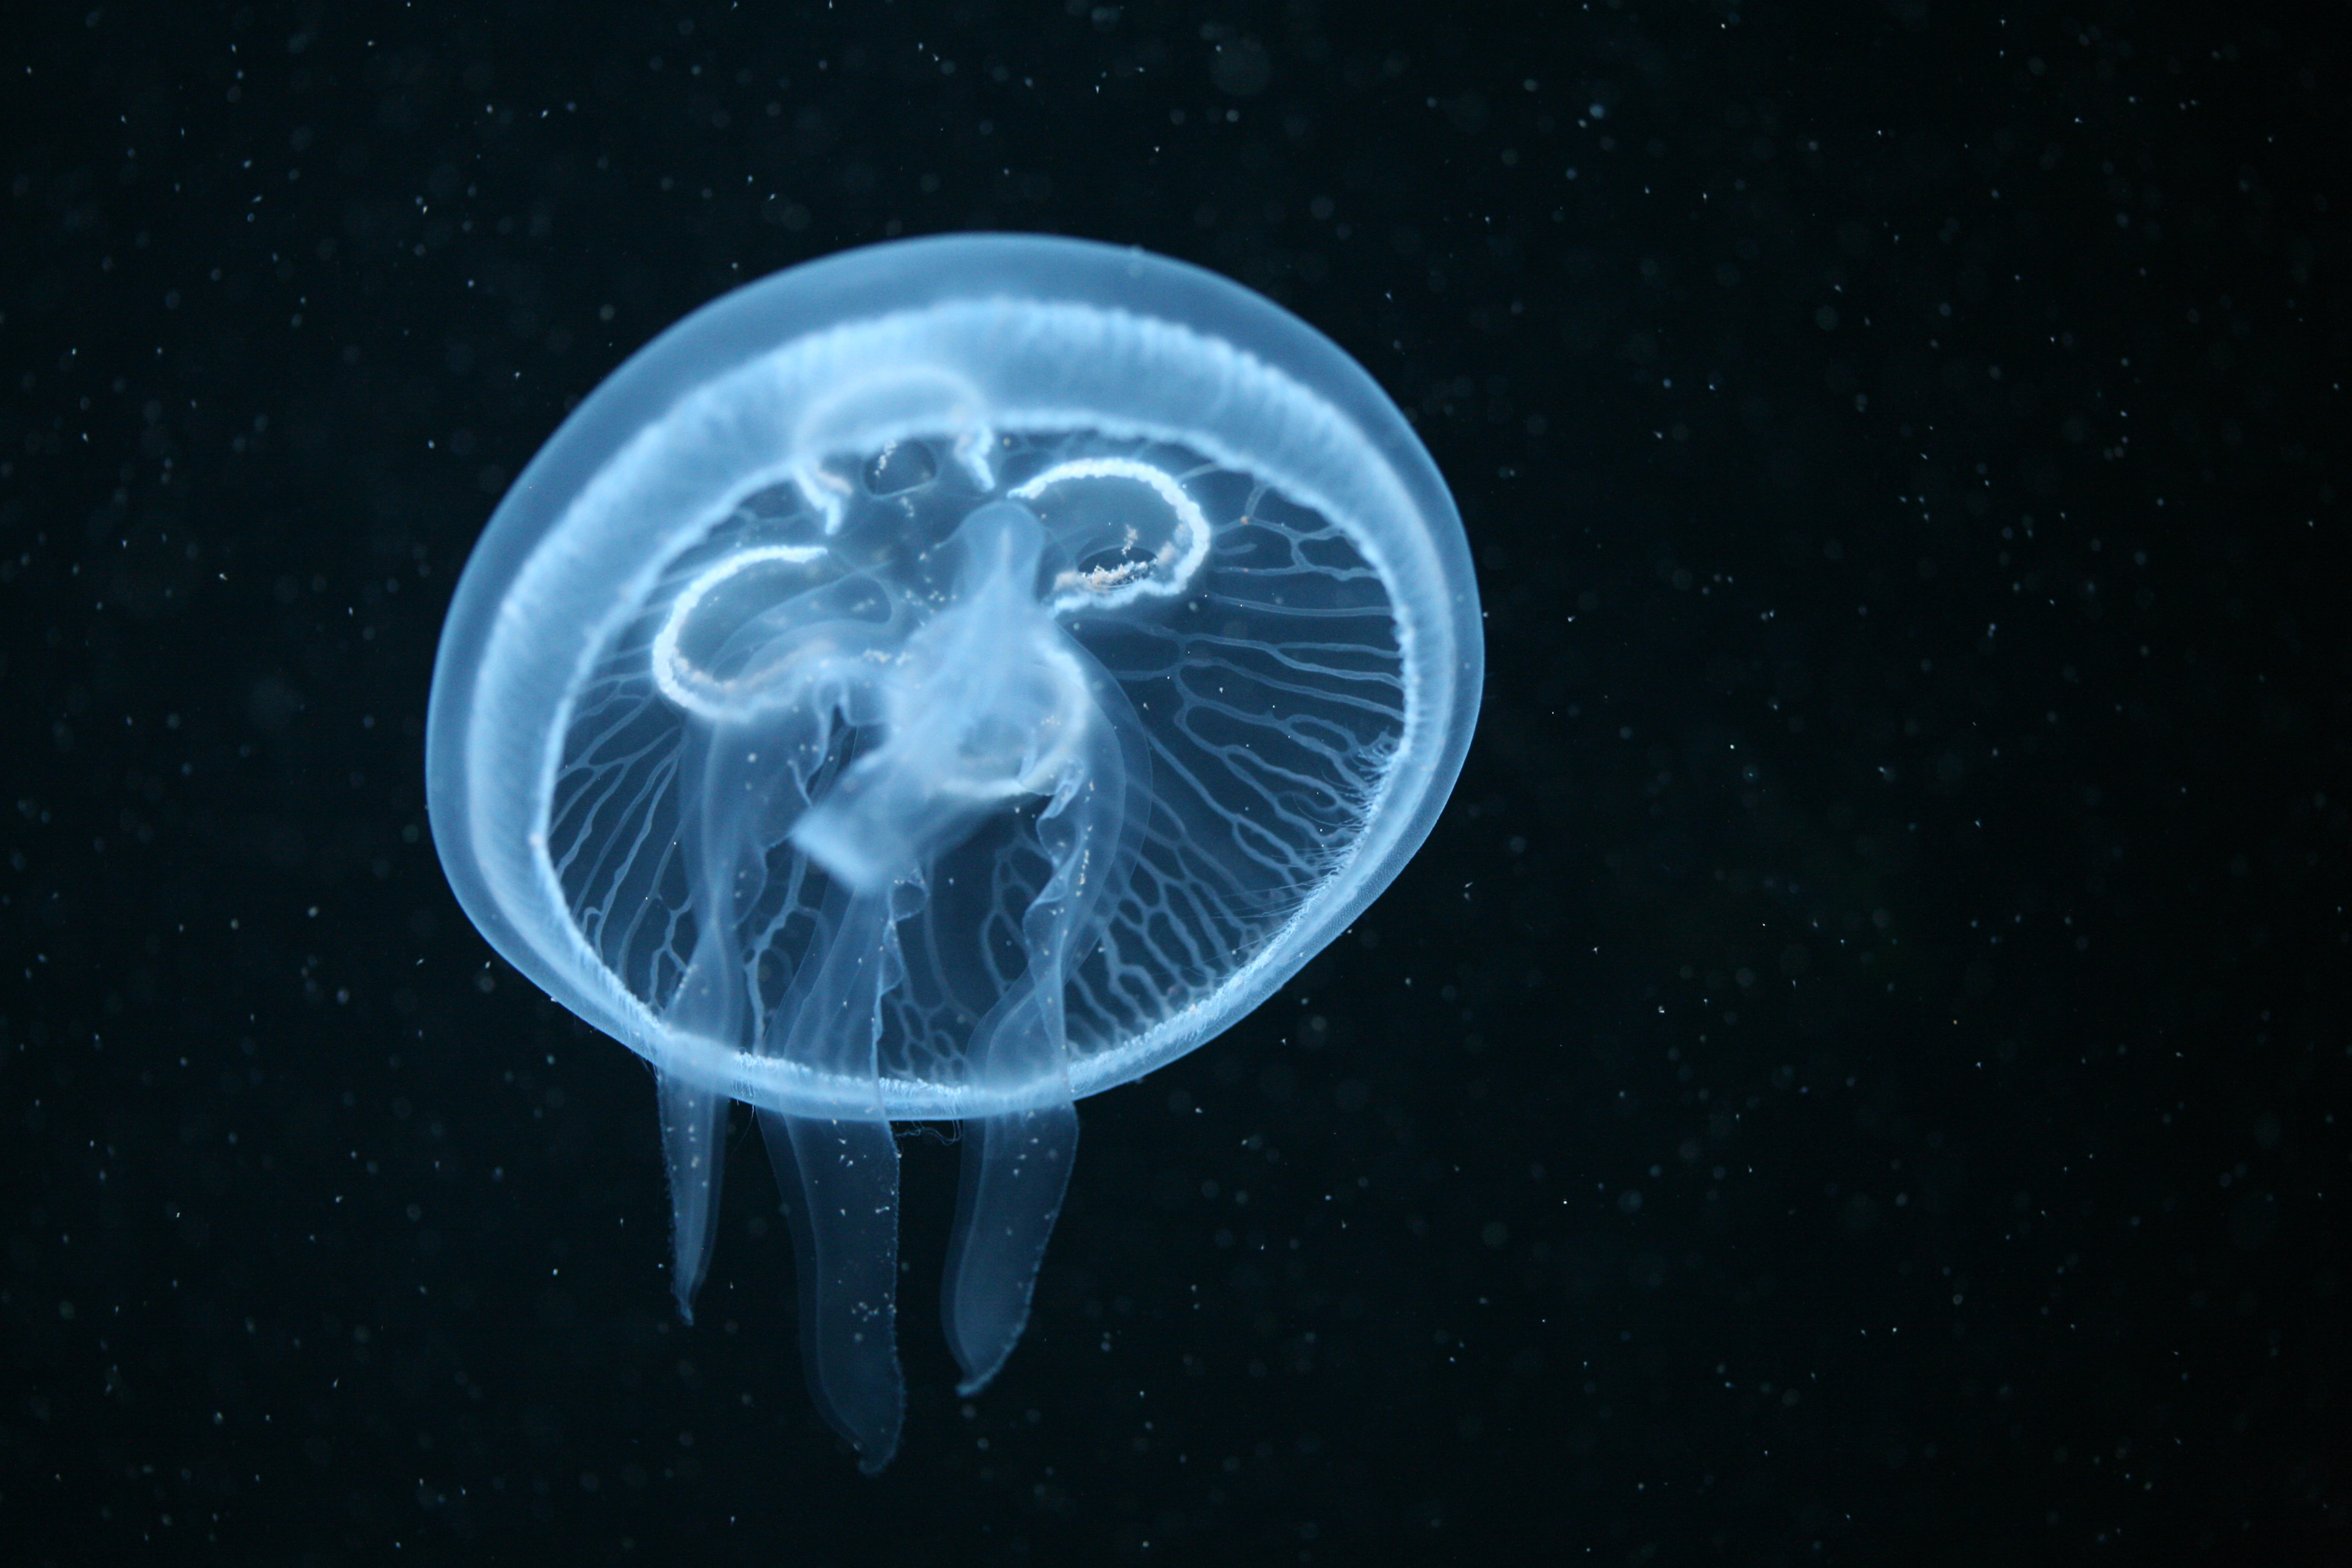 10599 Moon Jellyfish